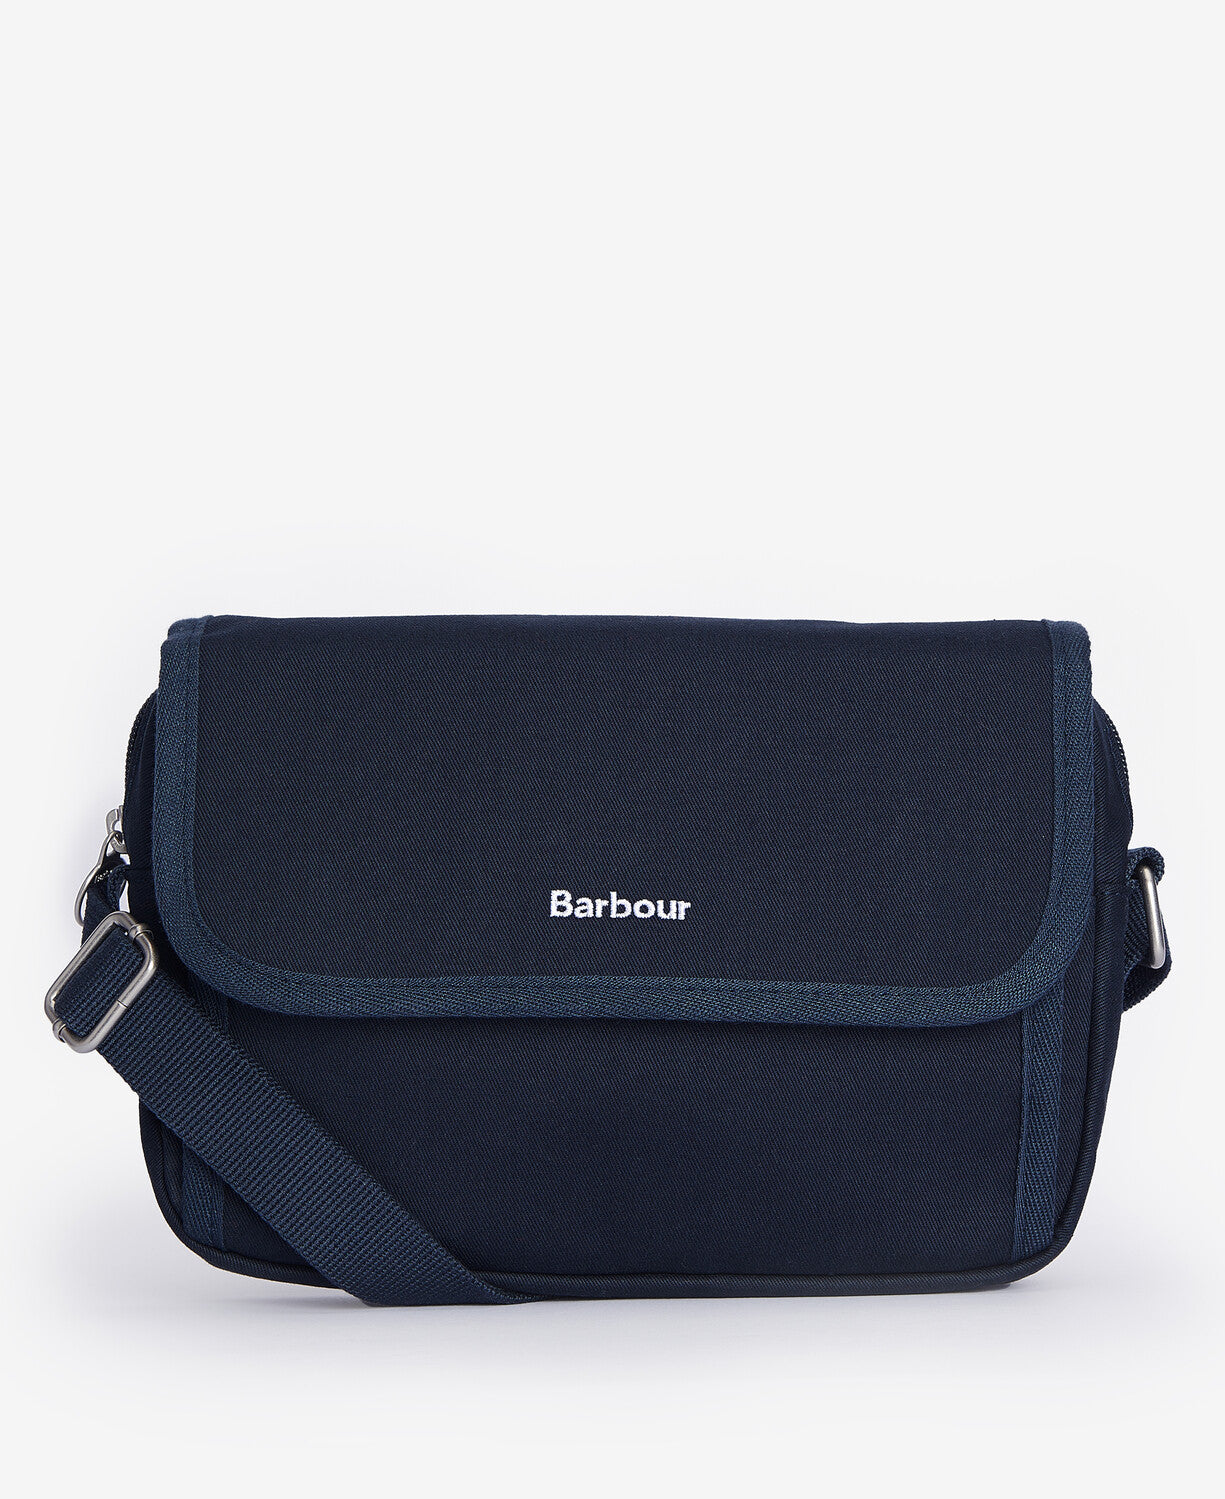 Barbour Olivia Cross Body Bag